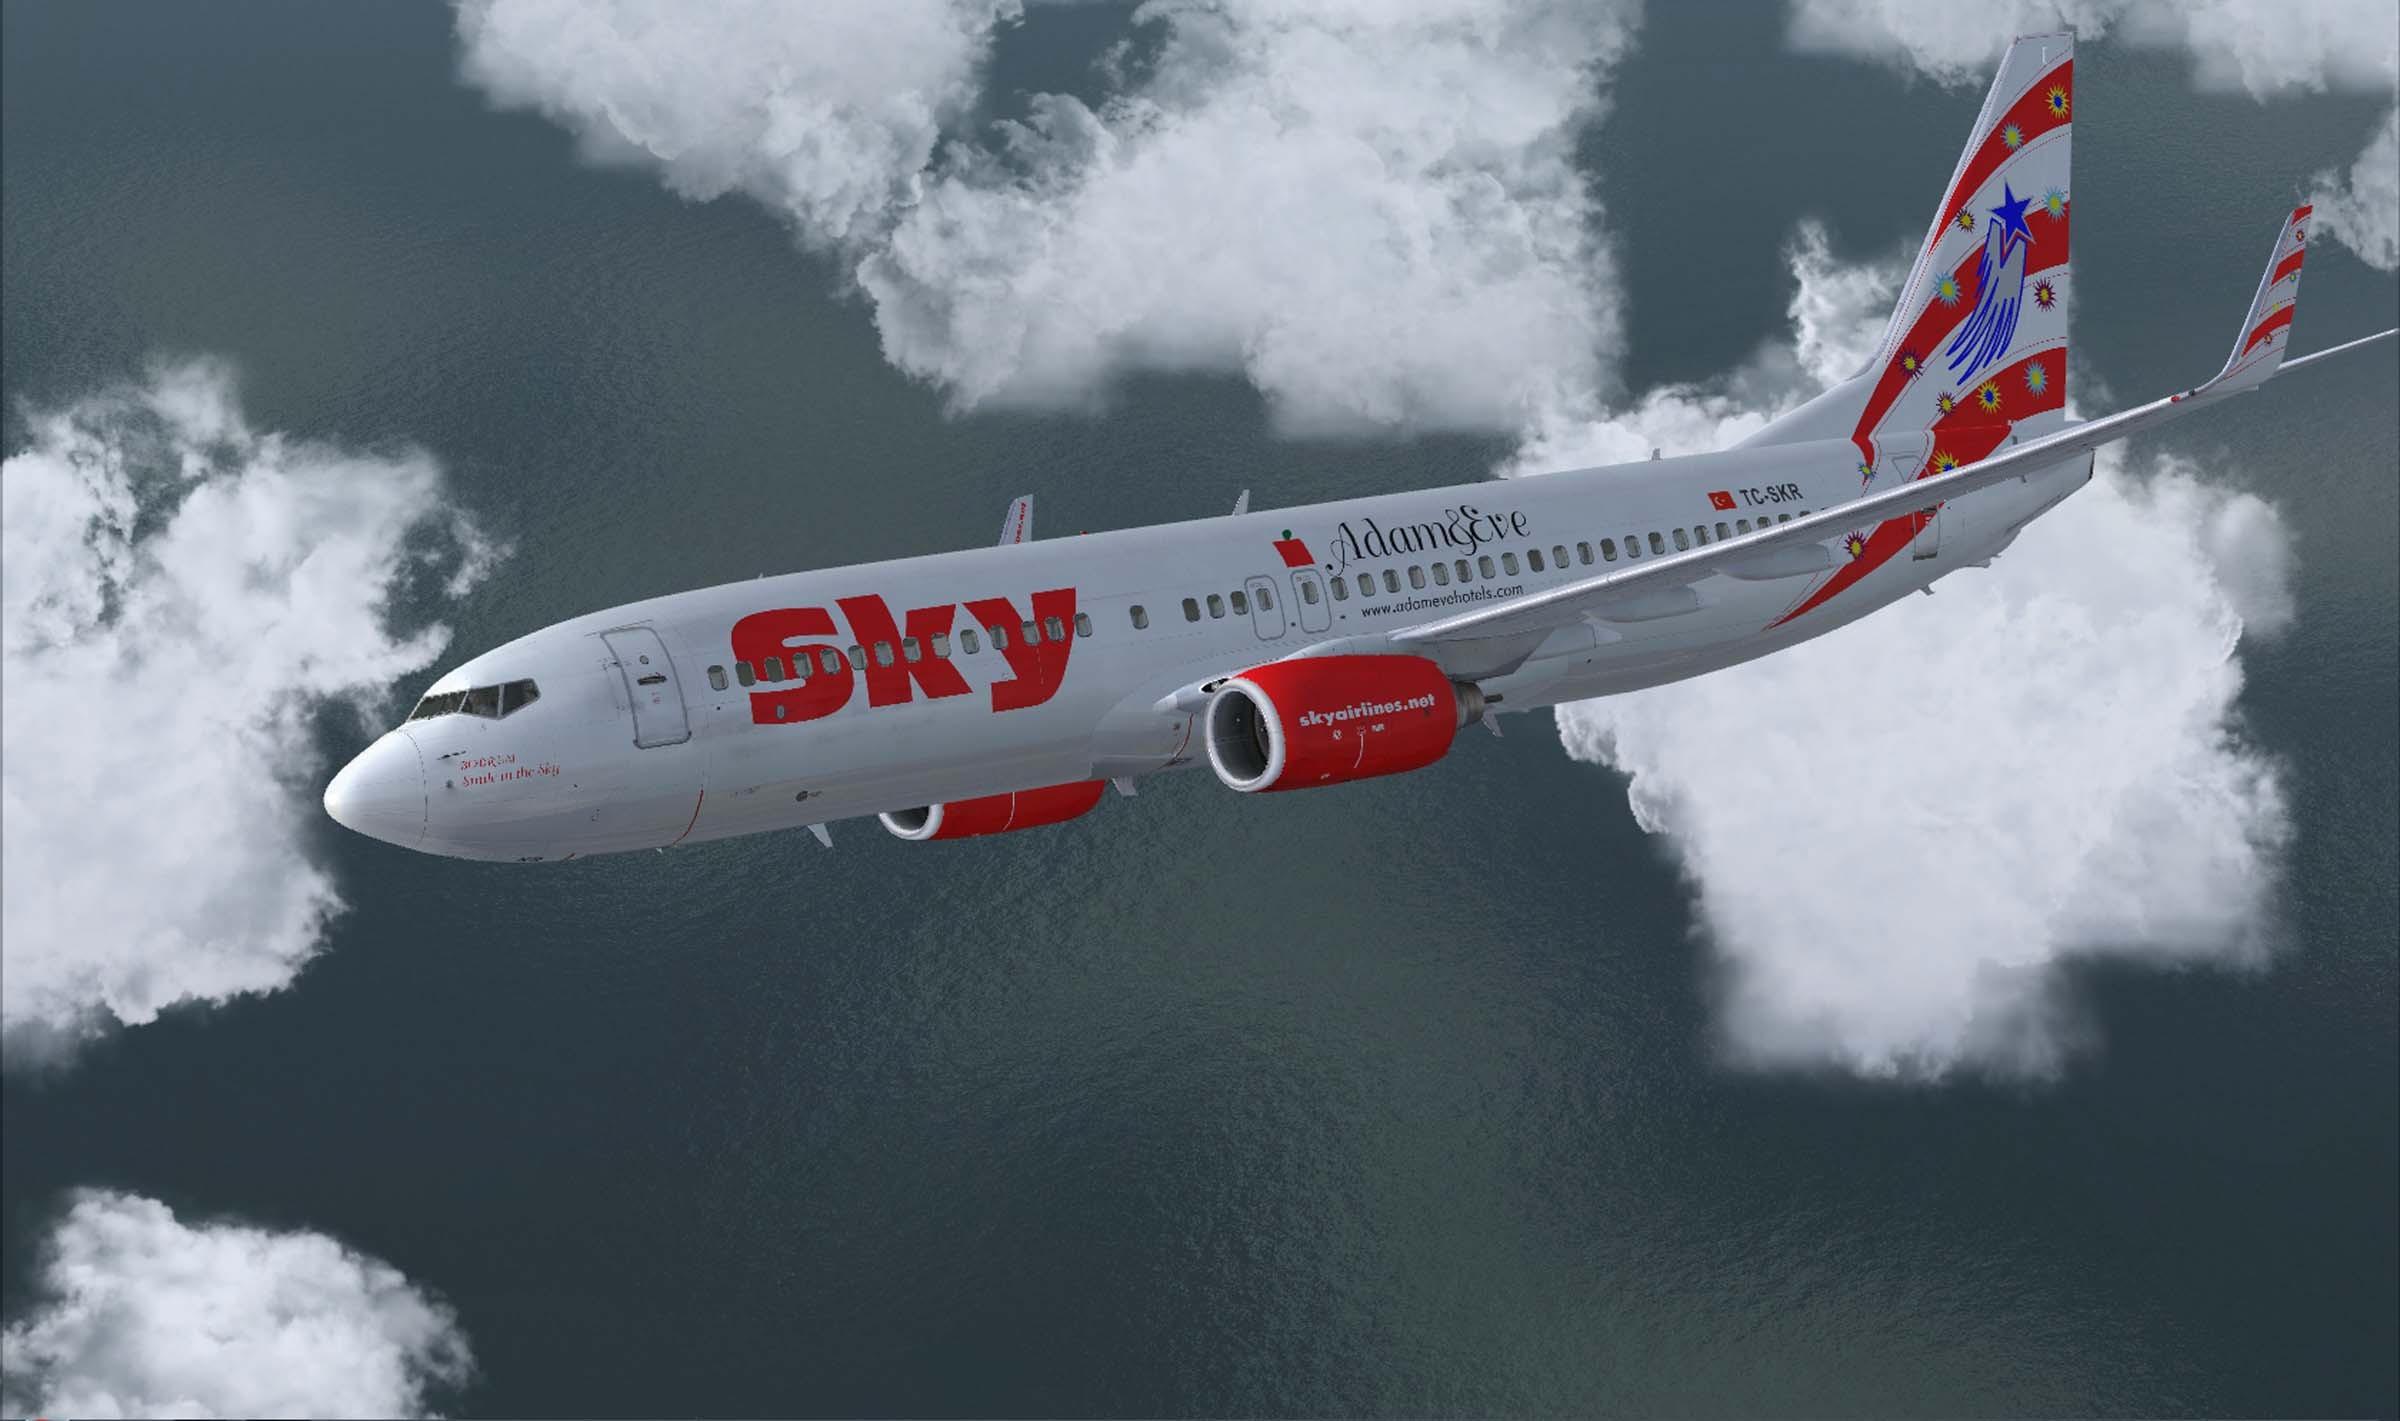 PMDG NGX Sky Airlines Boyaması Sendfile